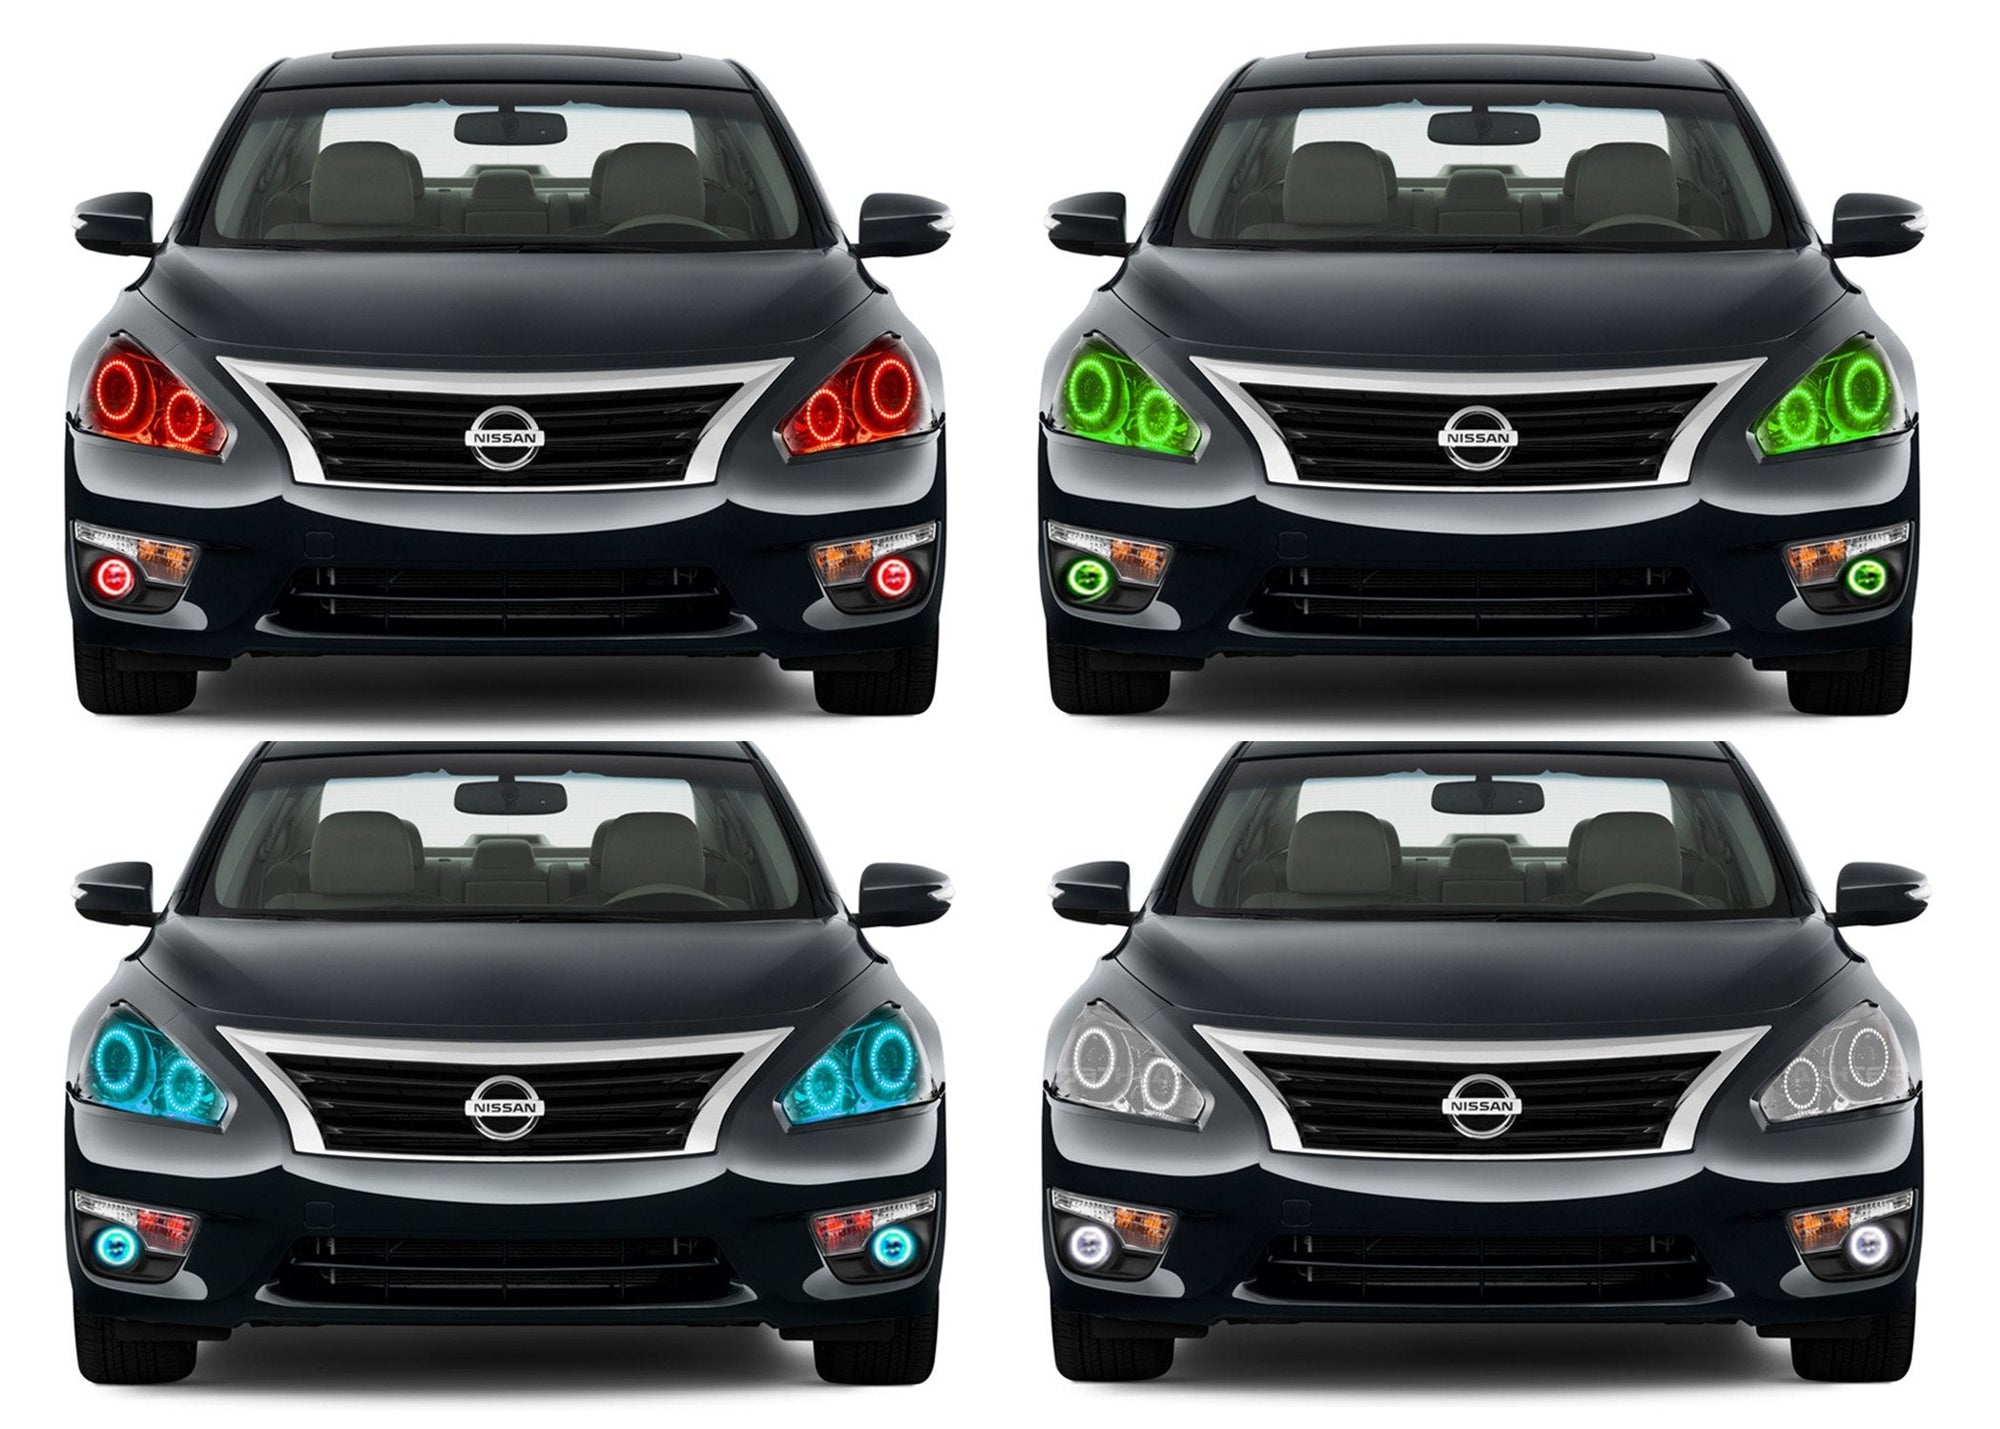 Nissan-Altima-2013, 2014, 2015-LED-Halo-Headlights and Fog Lights-RGB-No Remote-NI-ALS1315-V3HF